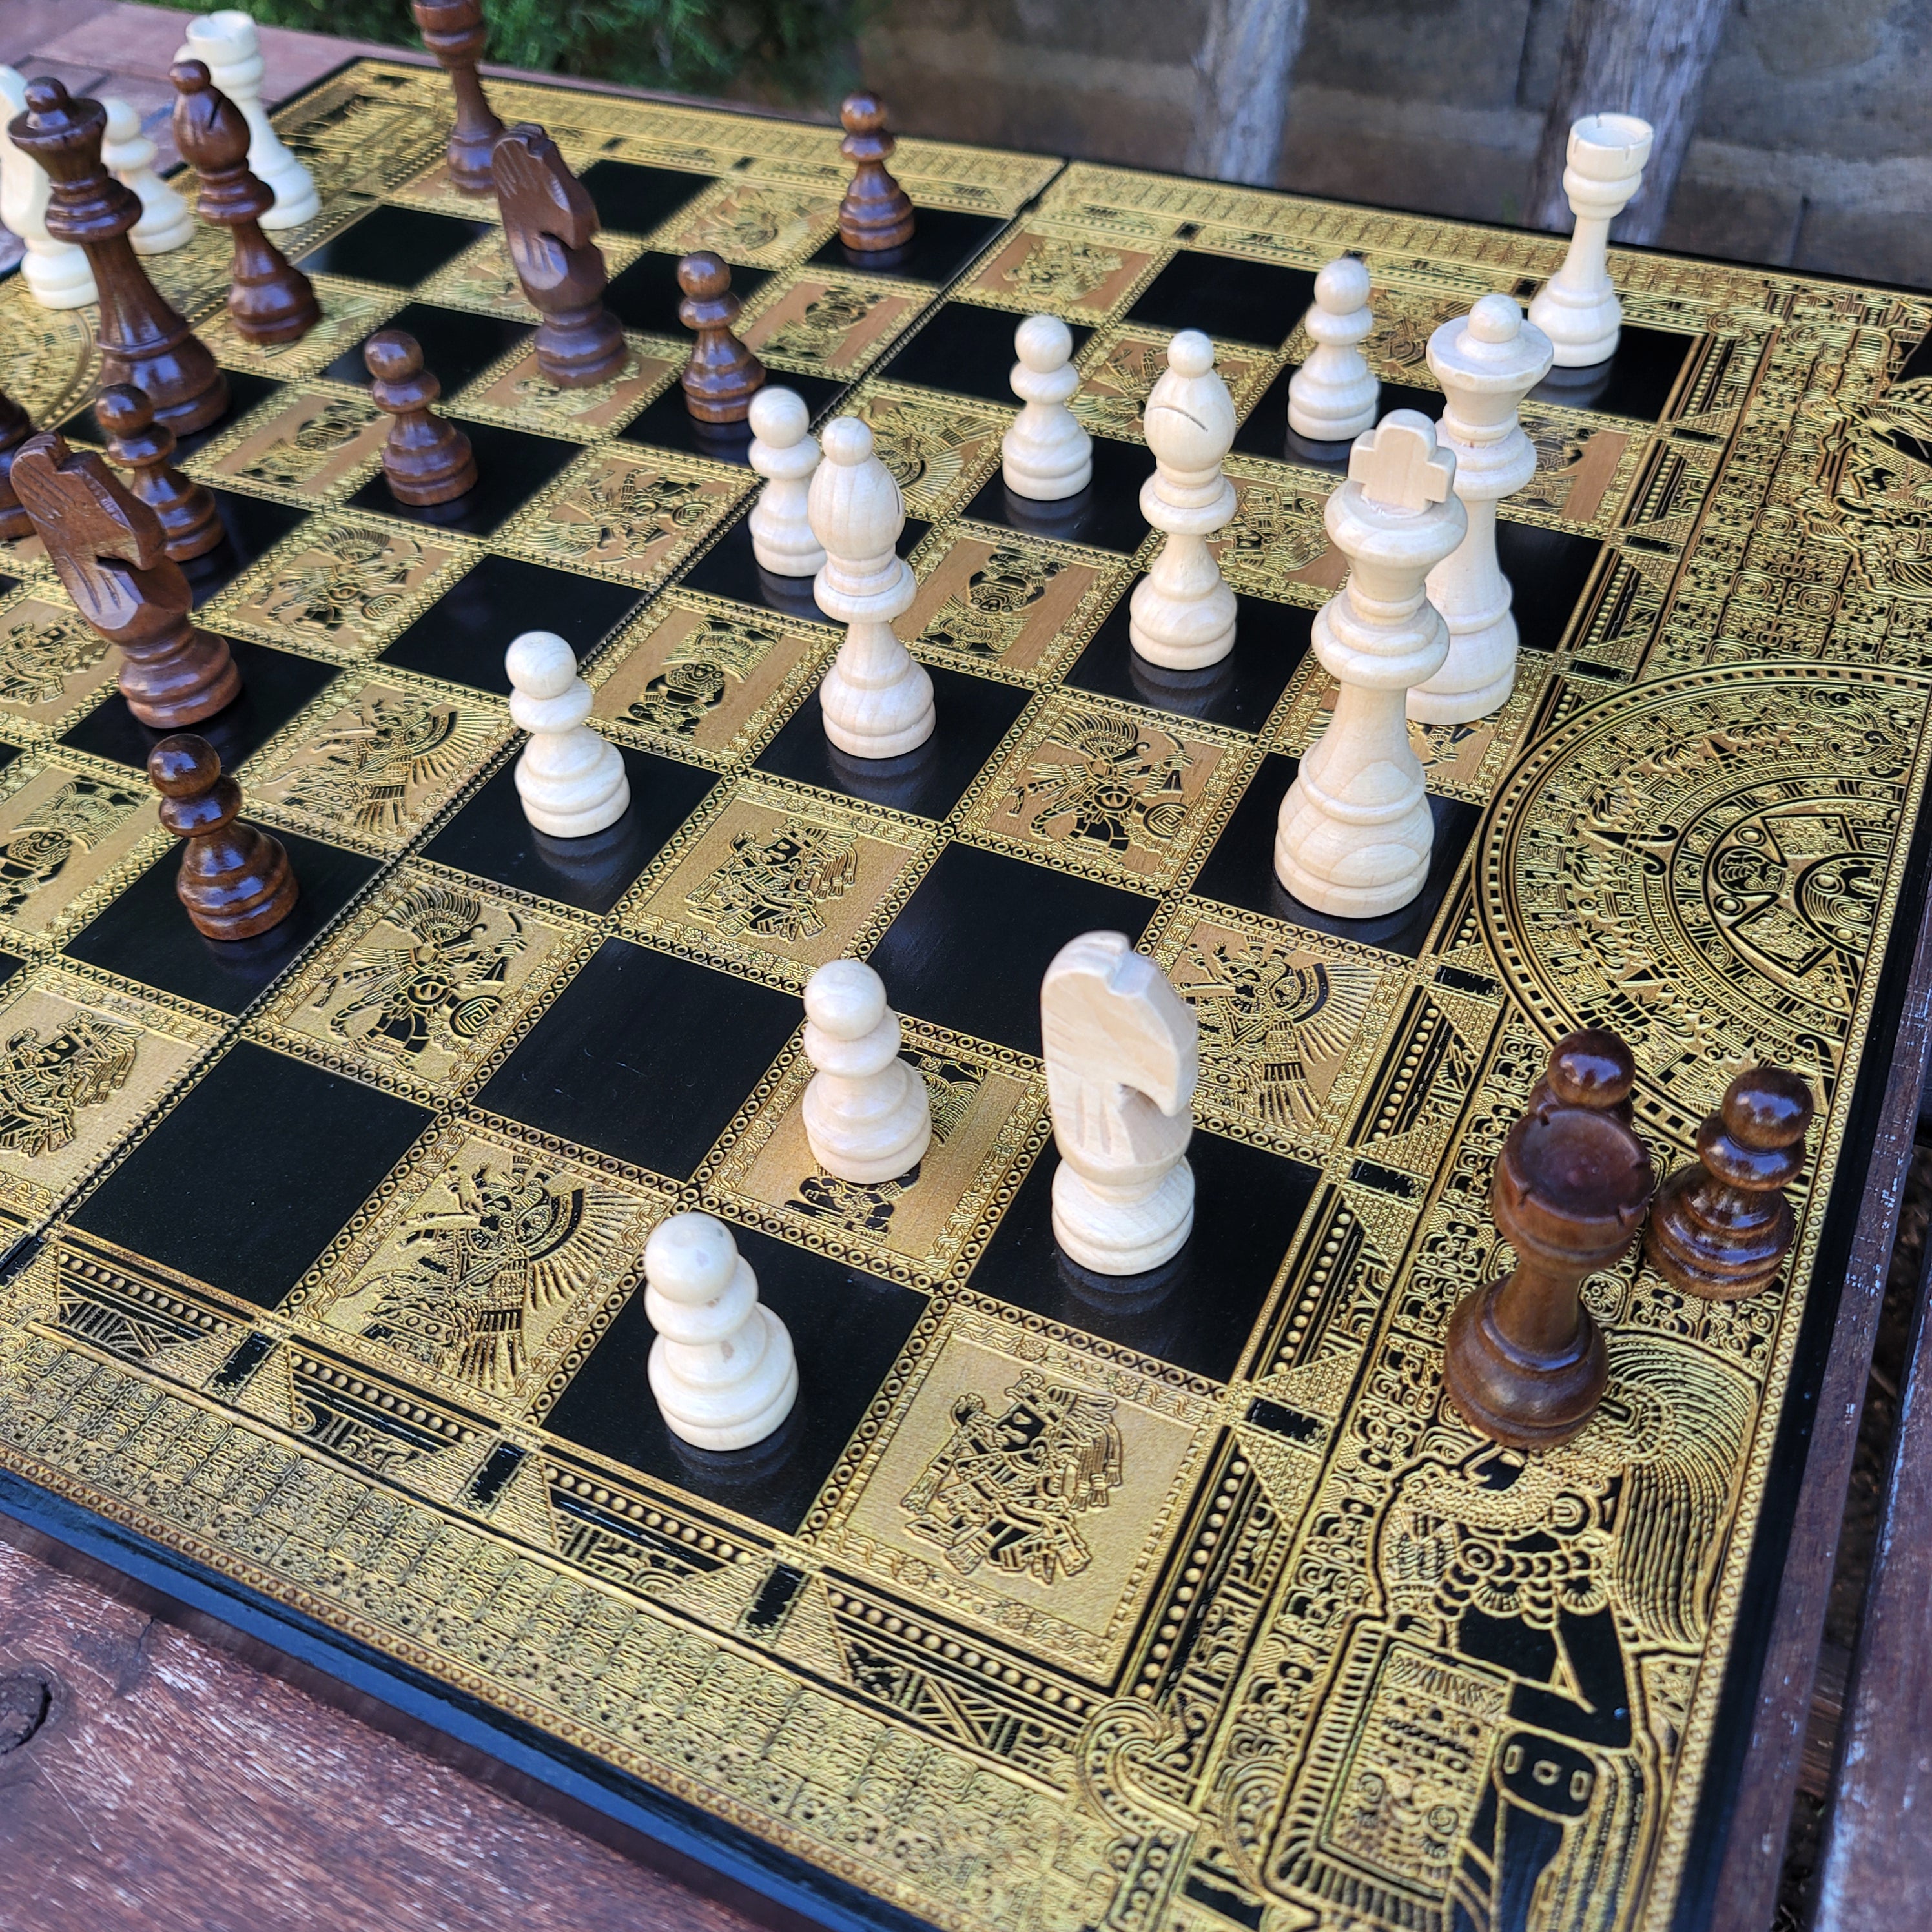 Medieval Themed Chess Set - Gold & Silver - Medium